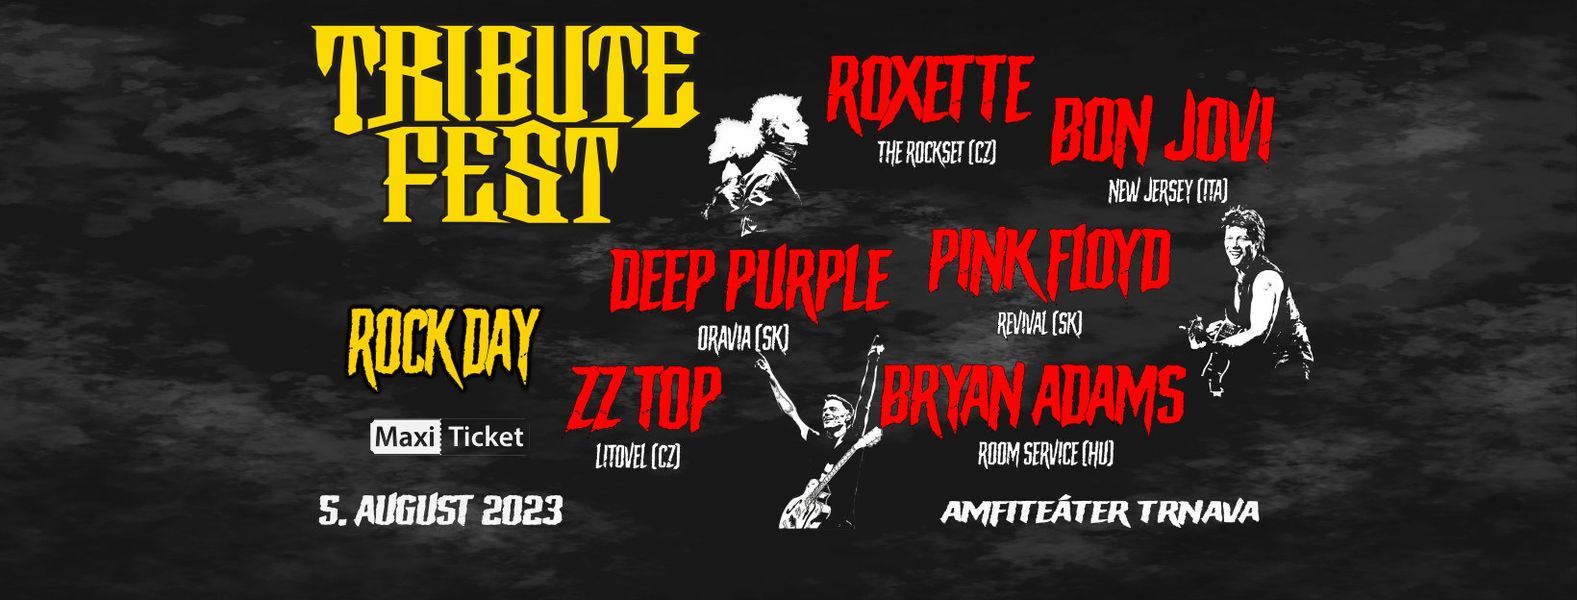 Tribute Fest 2023 - ROCK DAY AMFIK Trnava